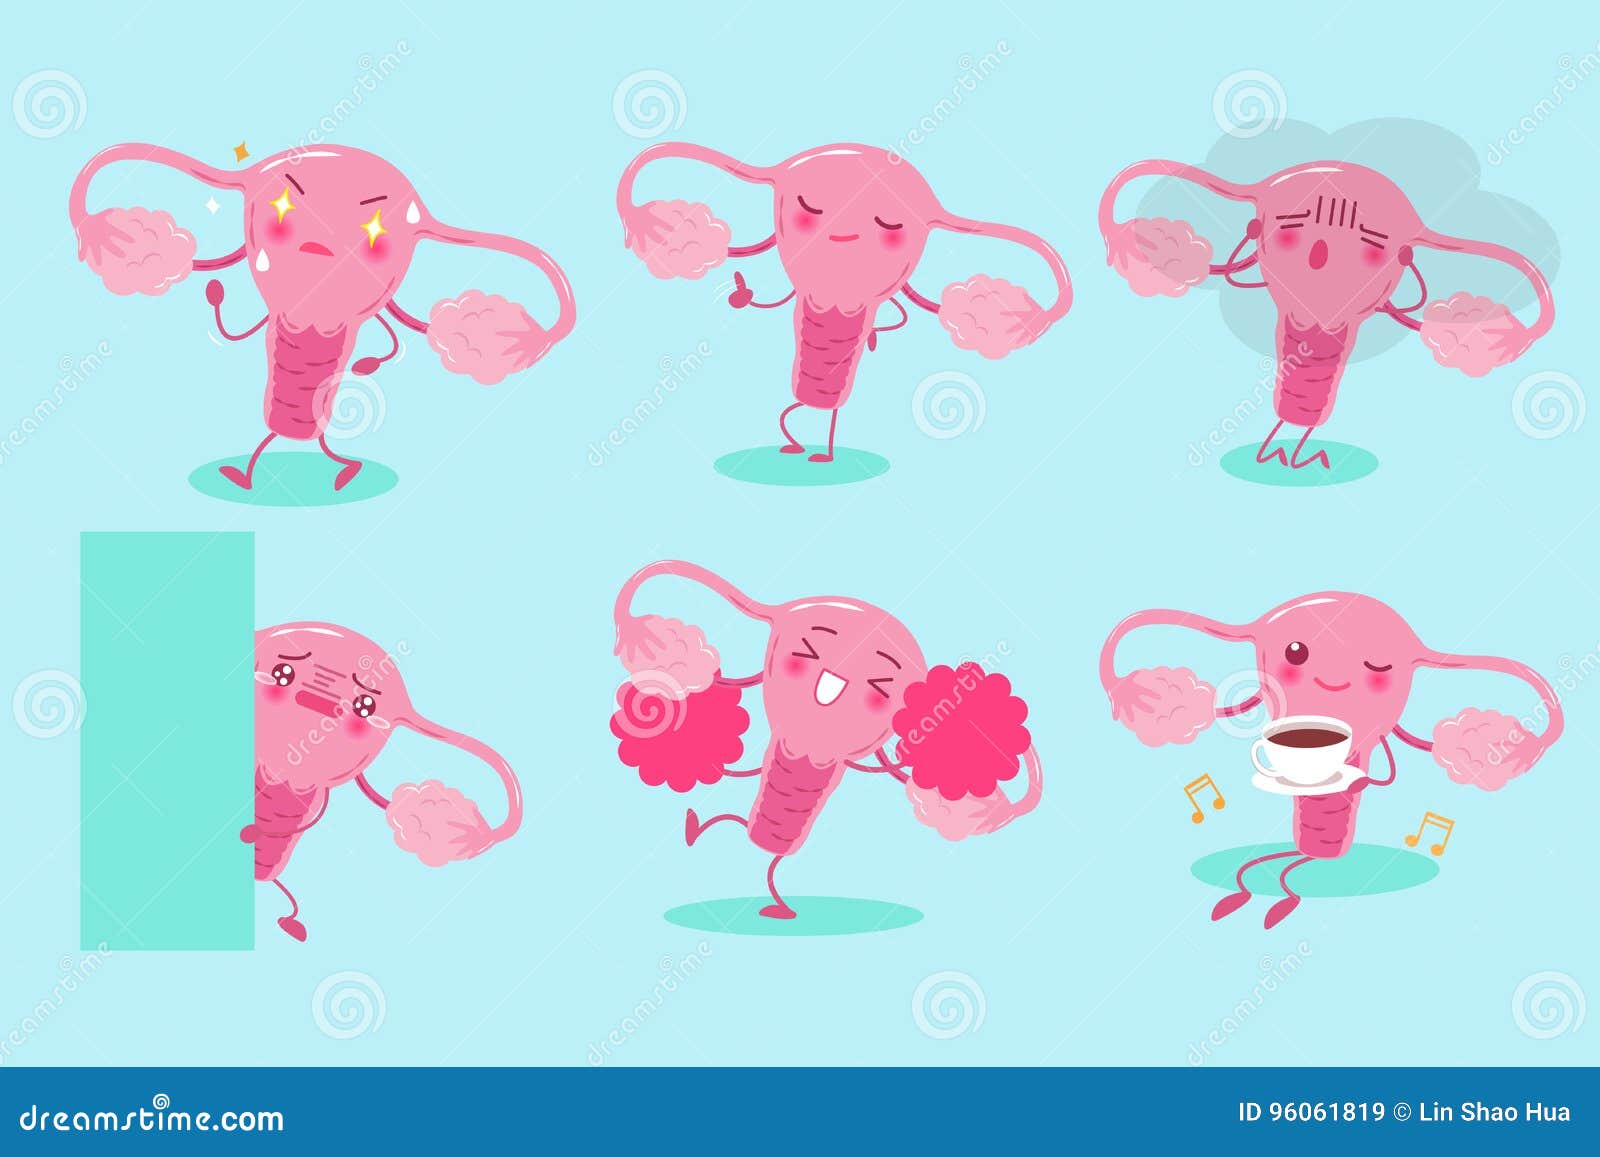 Cute cartoon uterus stock vector. Illustration of happy - 96061819